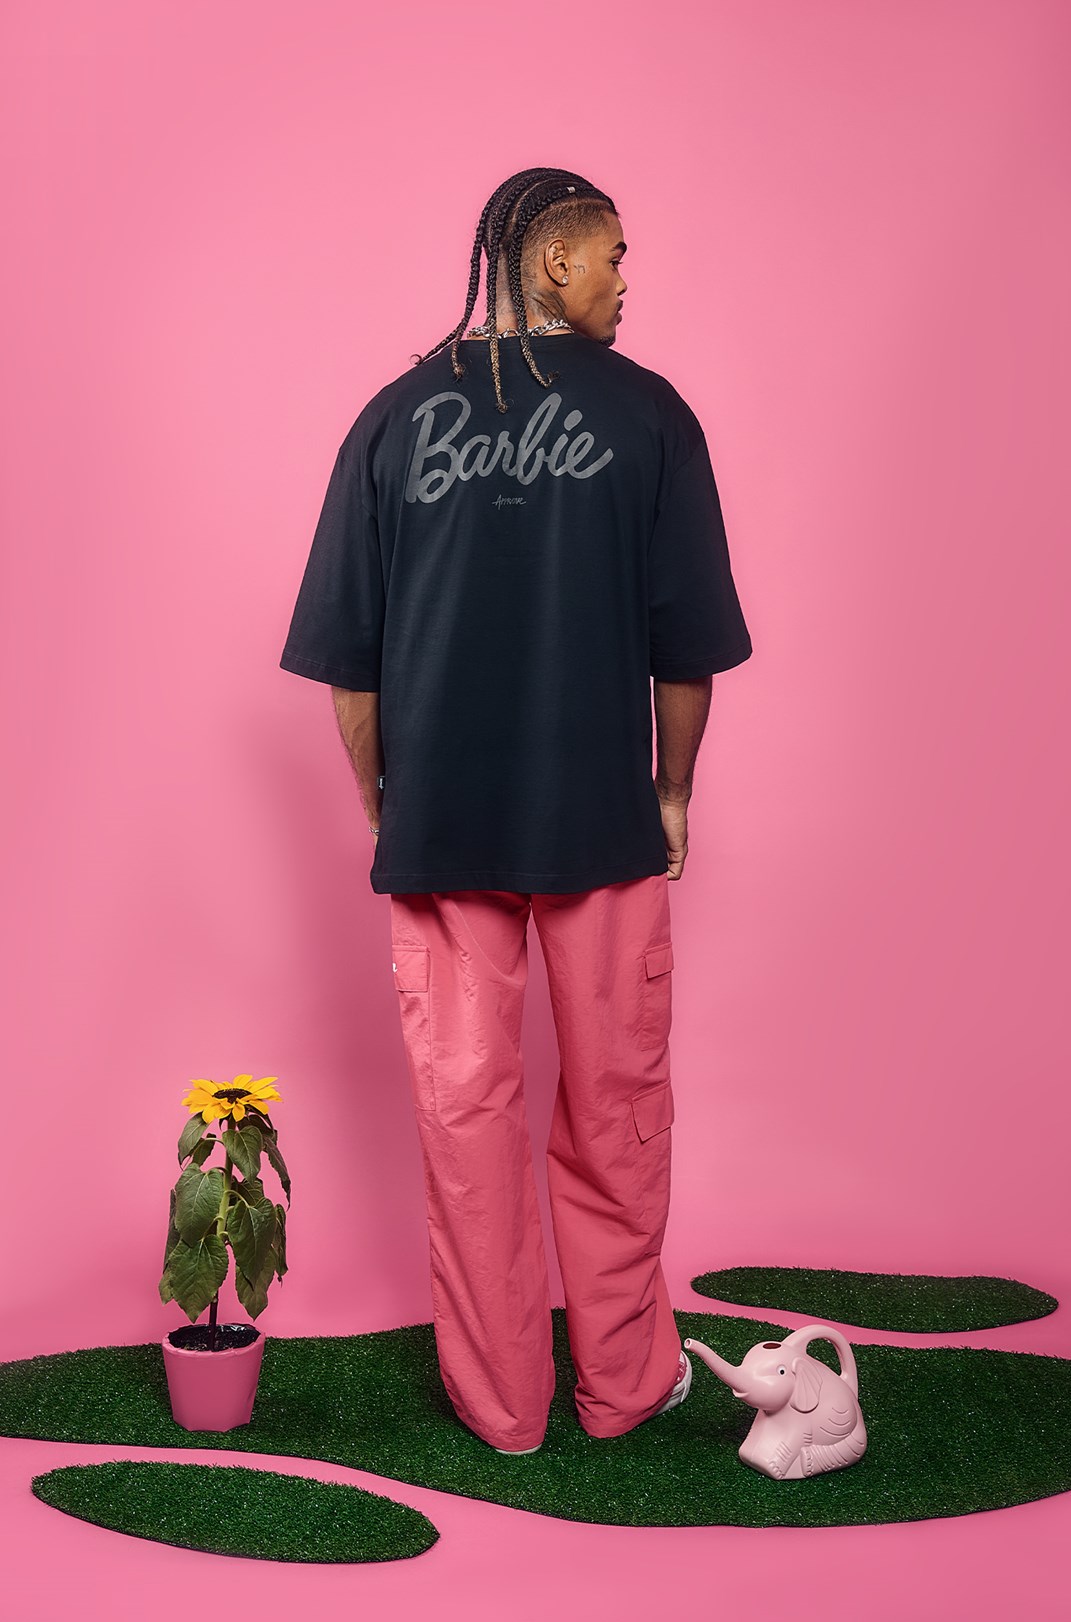 Camiseta Oversized Barbie X Approve Preta Preto